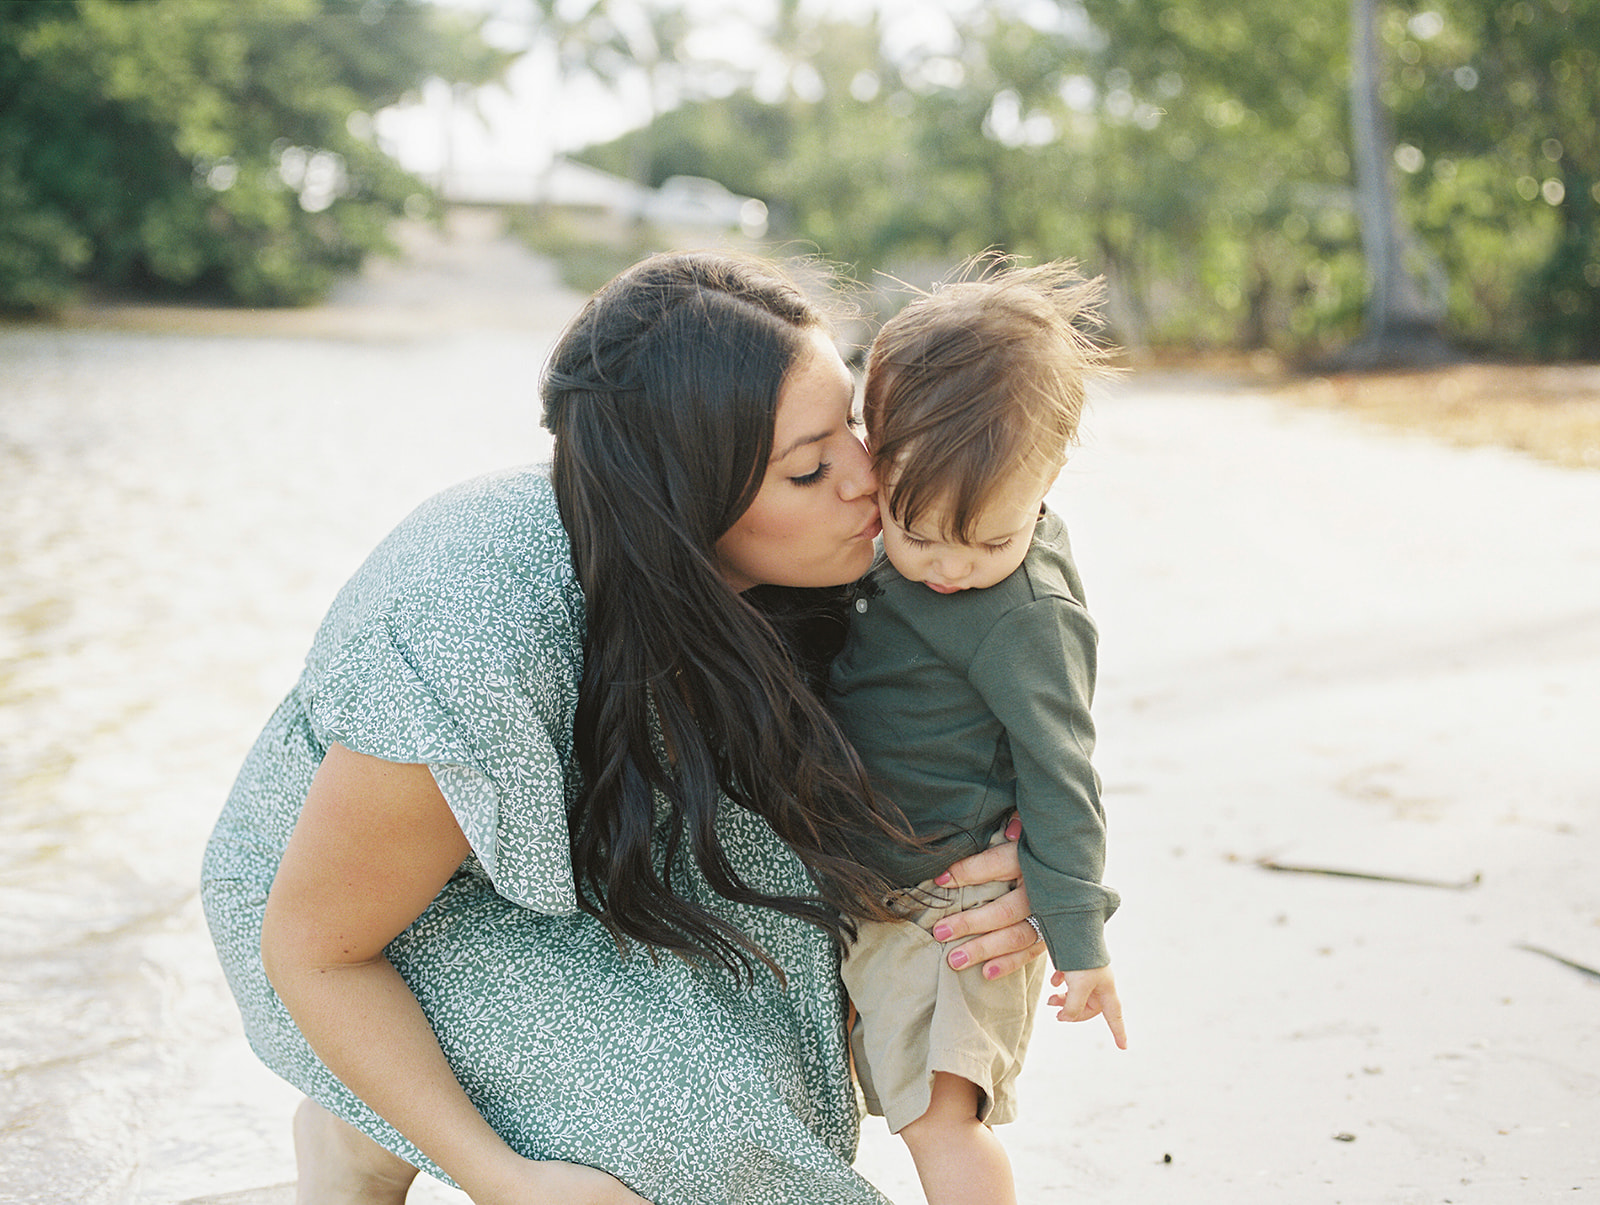 West Palm Beach Family photographer captures mom kissing little boy on cheek 